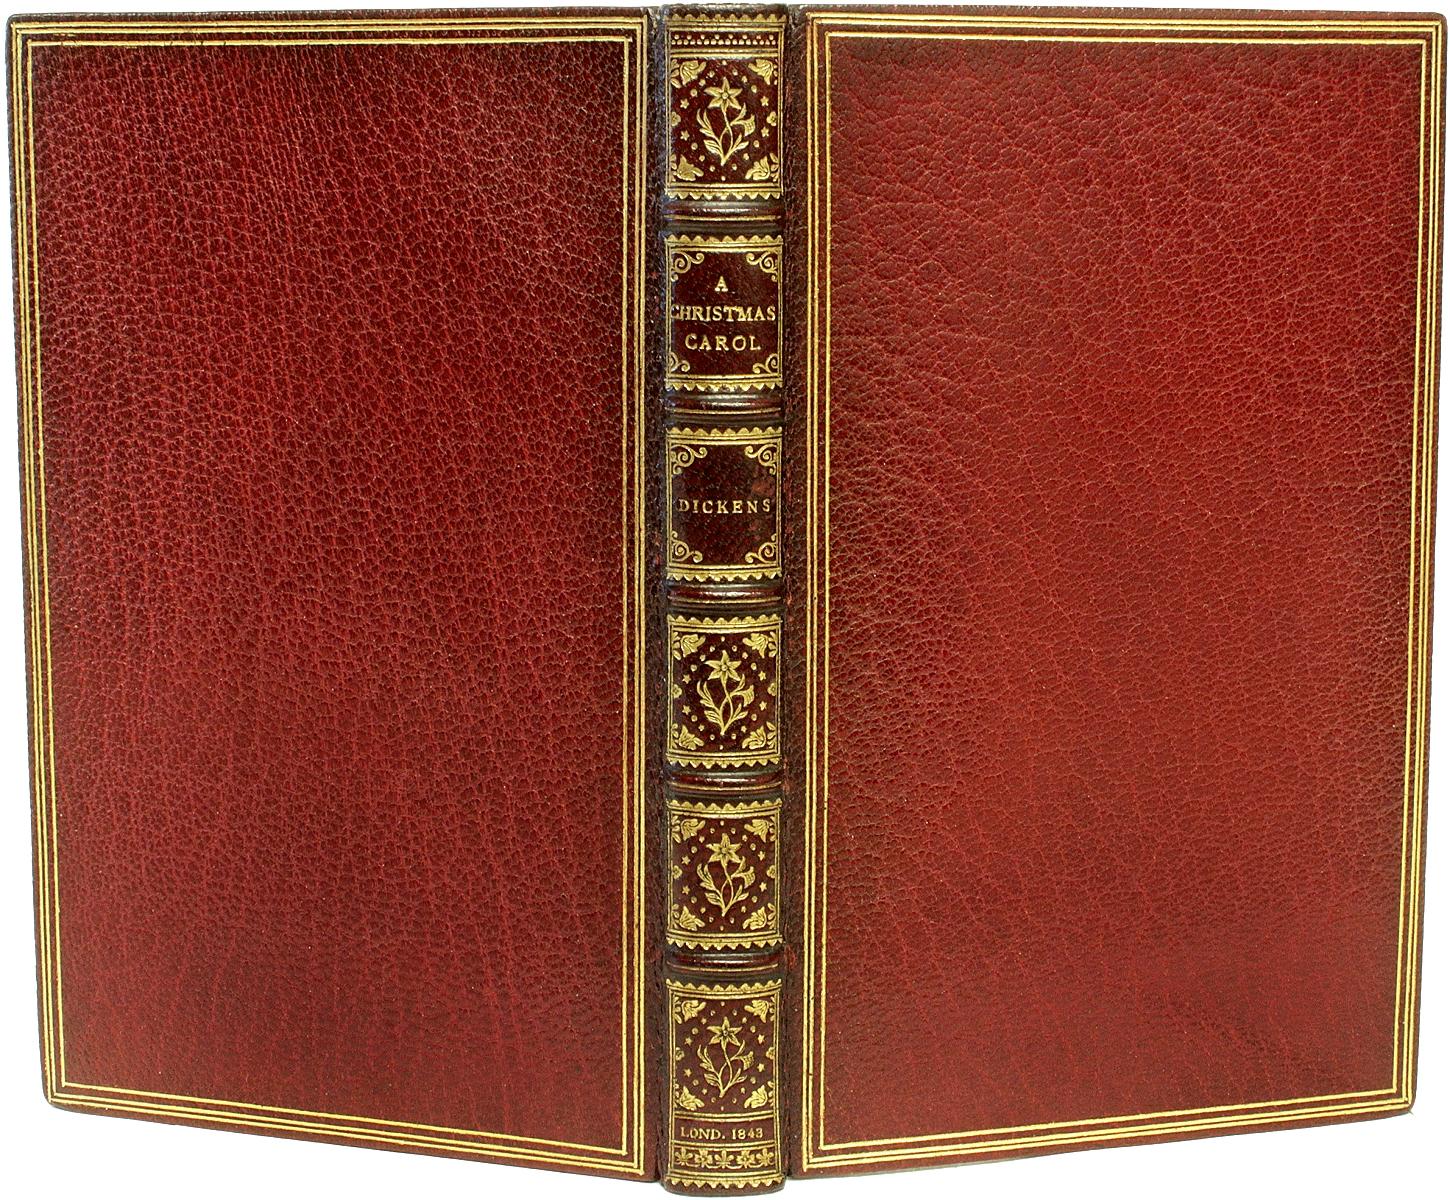 a christmas carol leather bound book